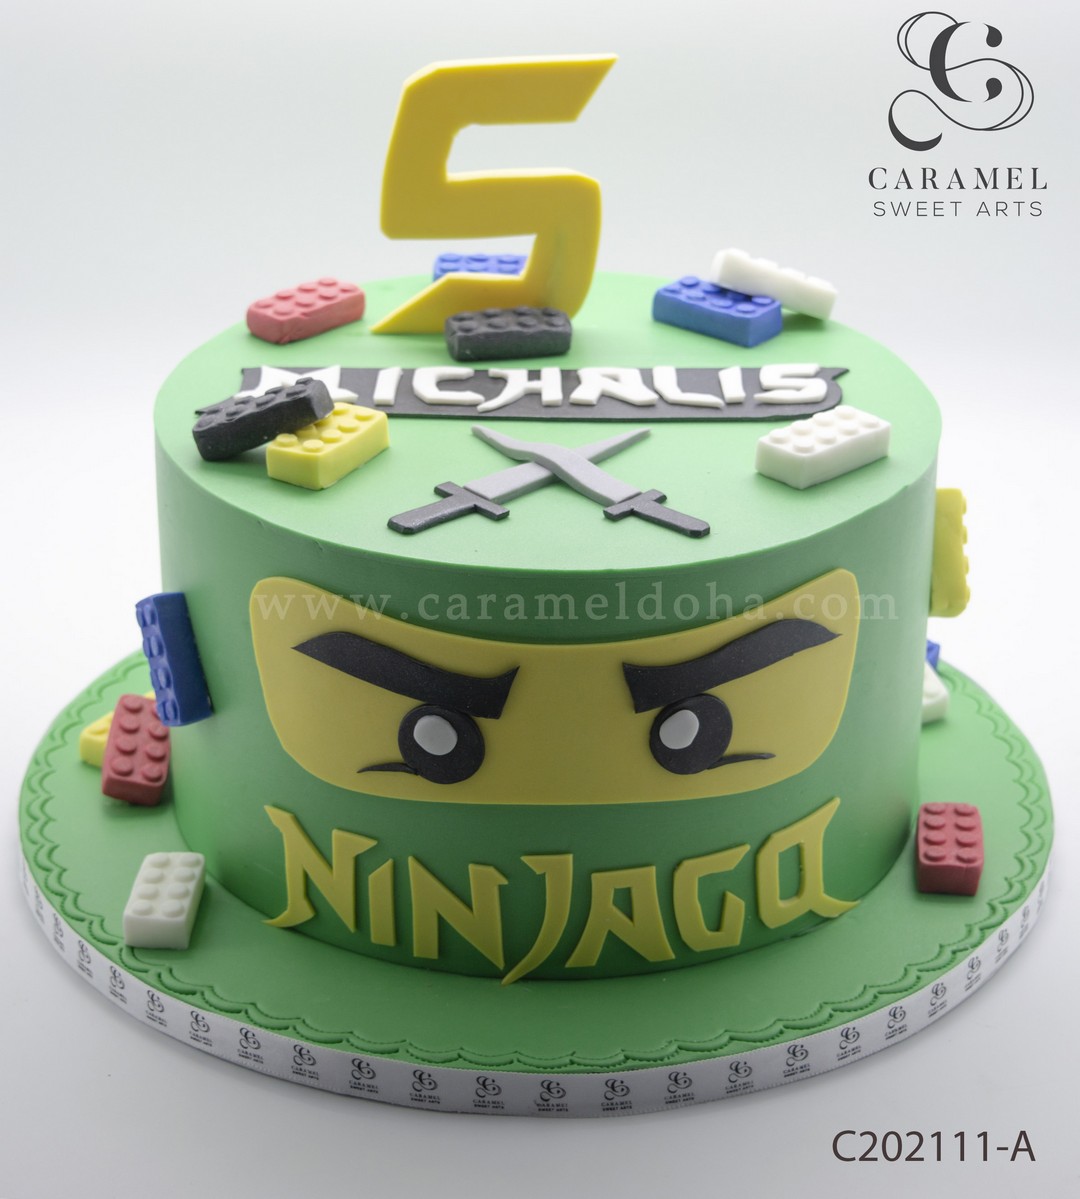 How to make a Ninjago Cake | Two Tier Cake - YouTube